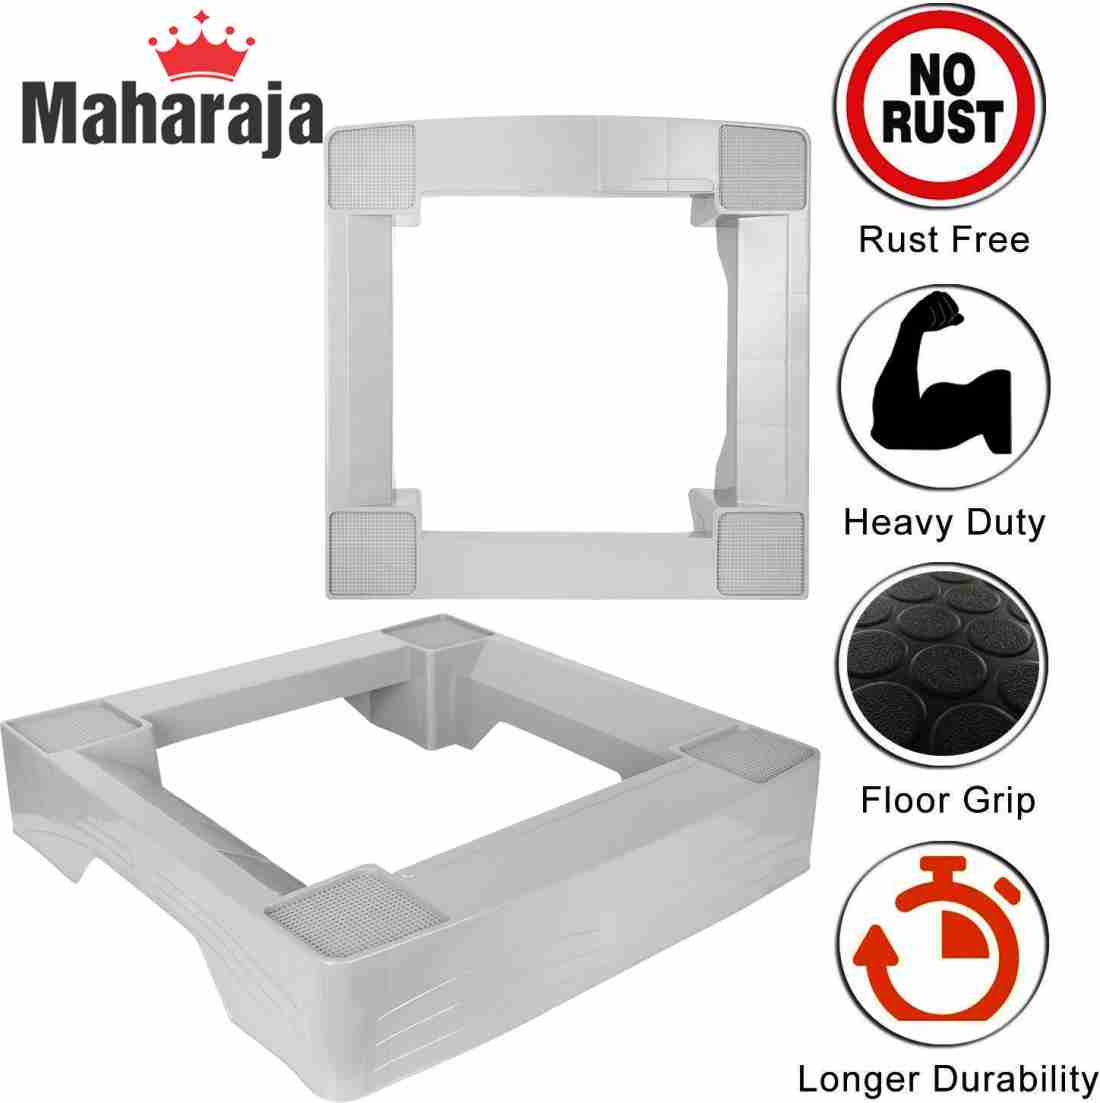 MAHARAJA Plastic Heavy Duty Fridge Refrigerator Stand for Double